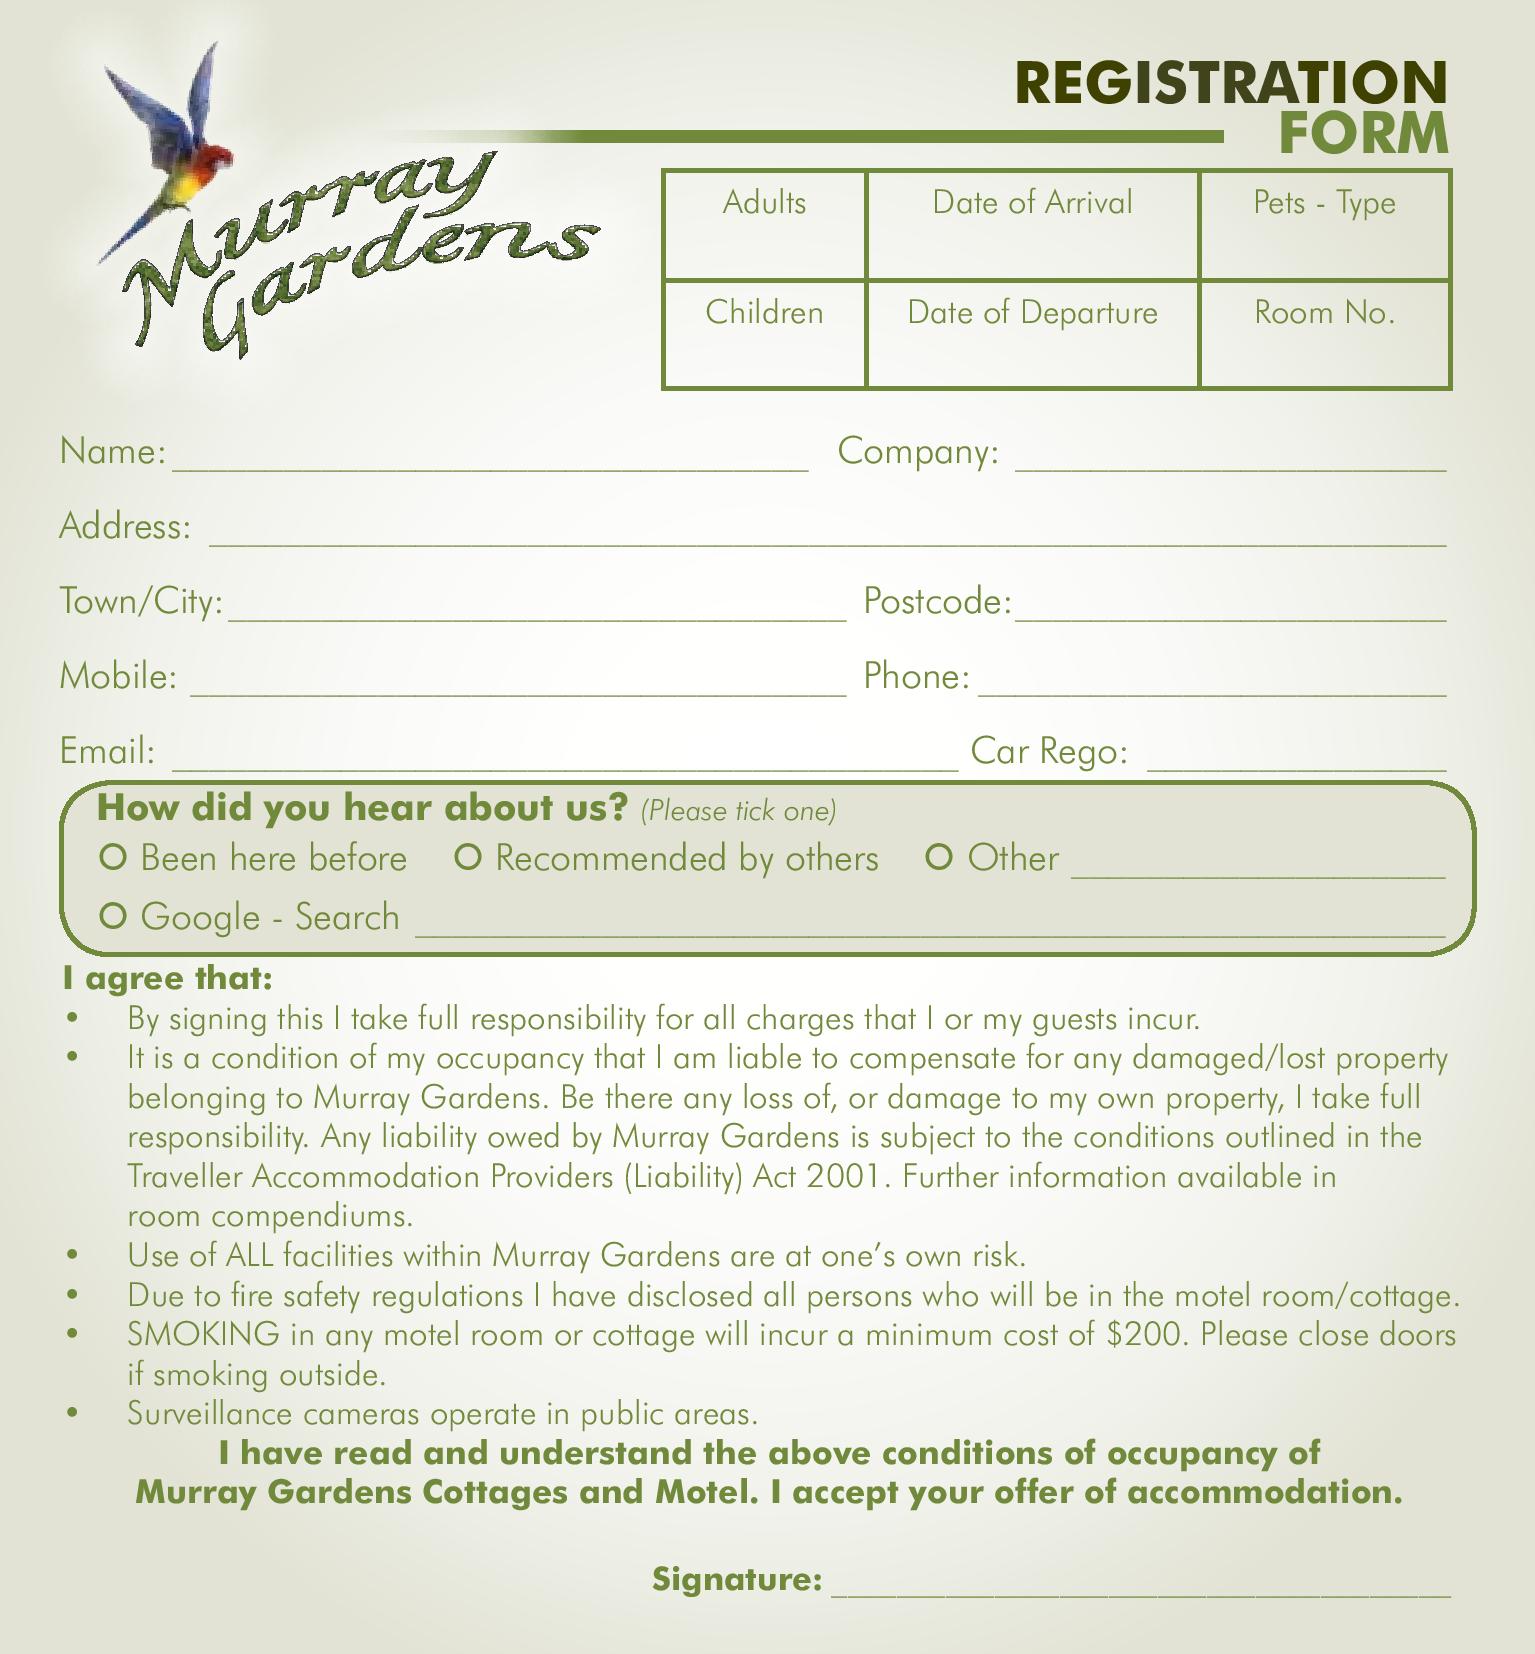 Registration Form 2013-page-001